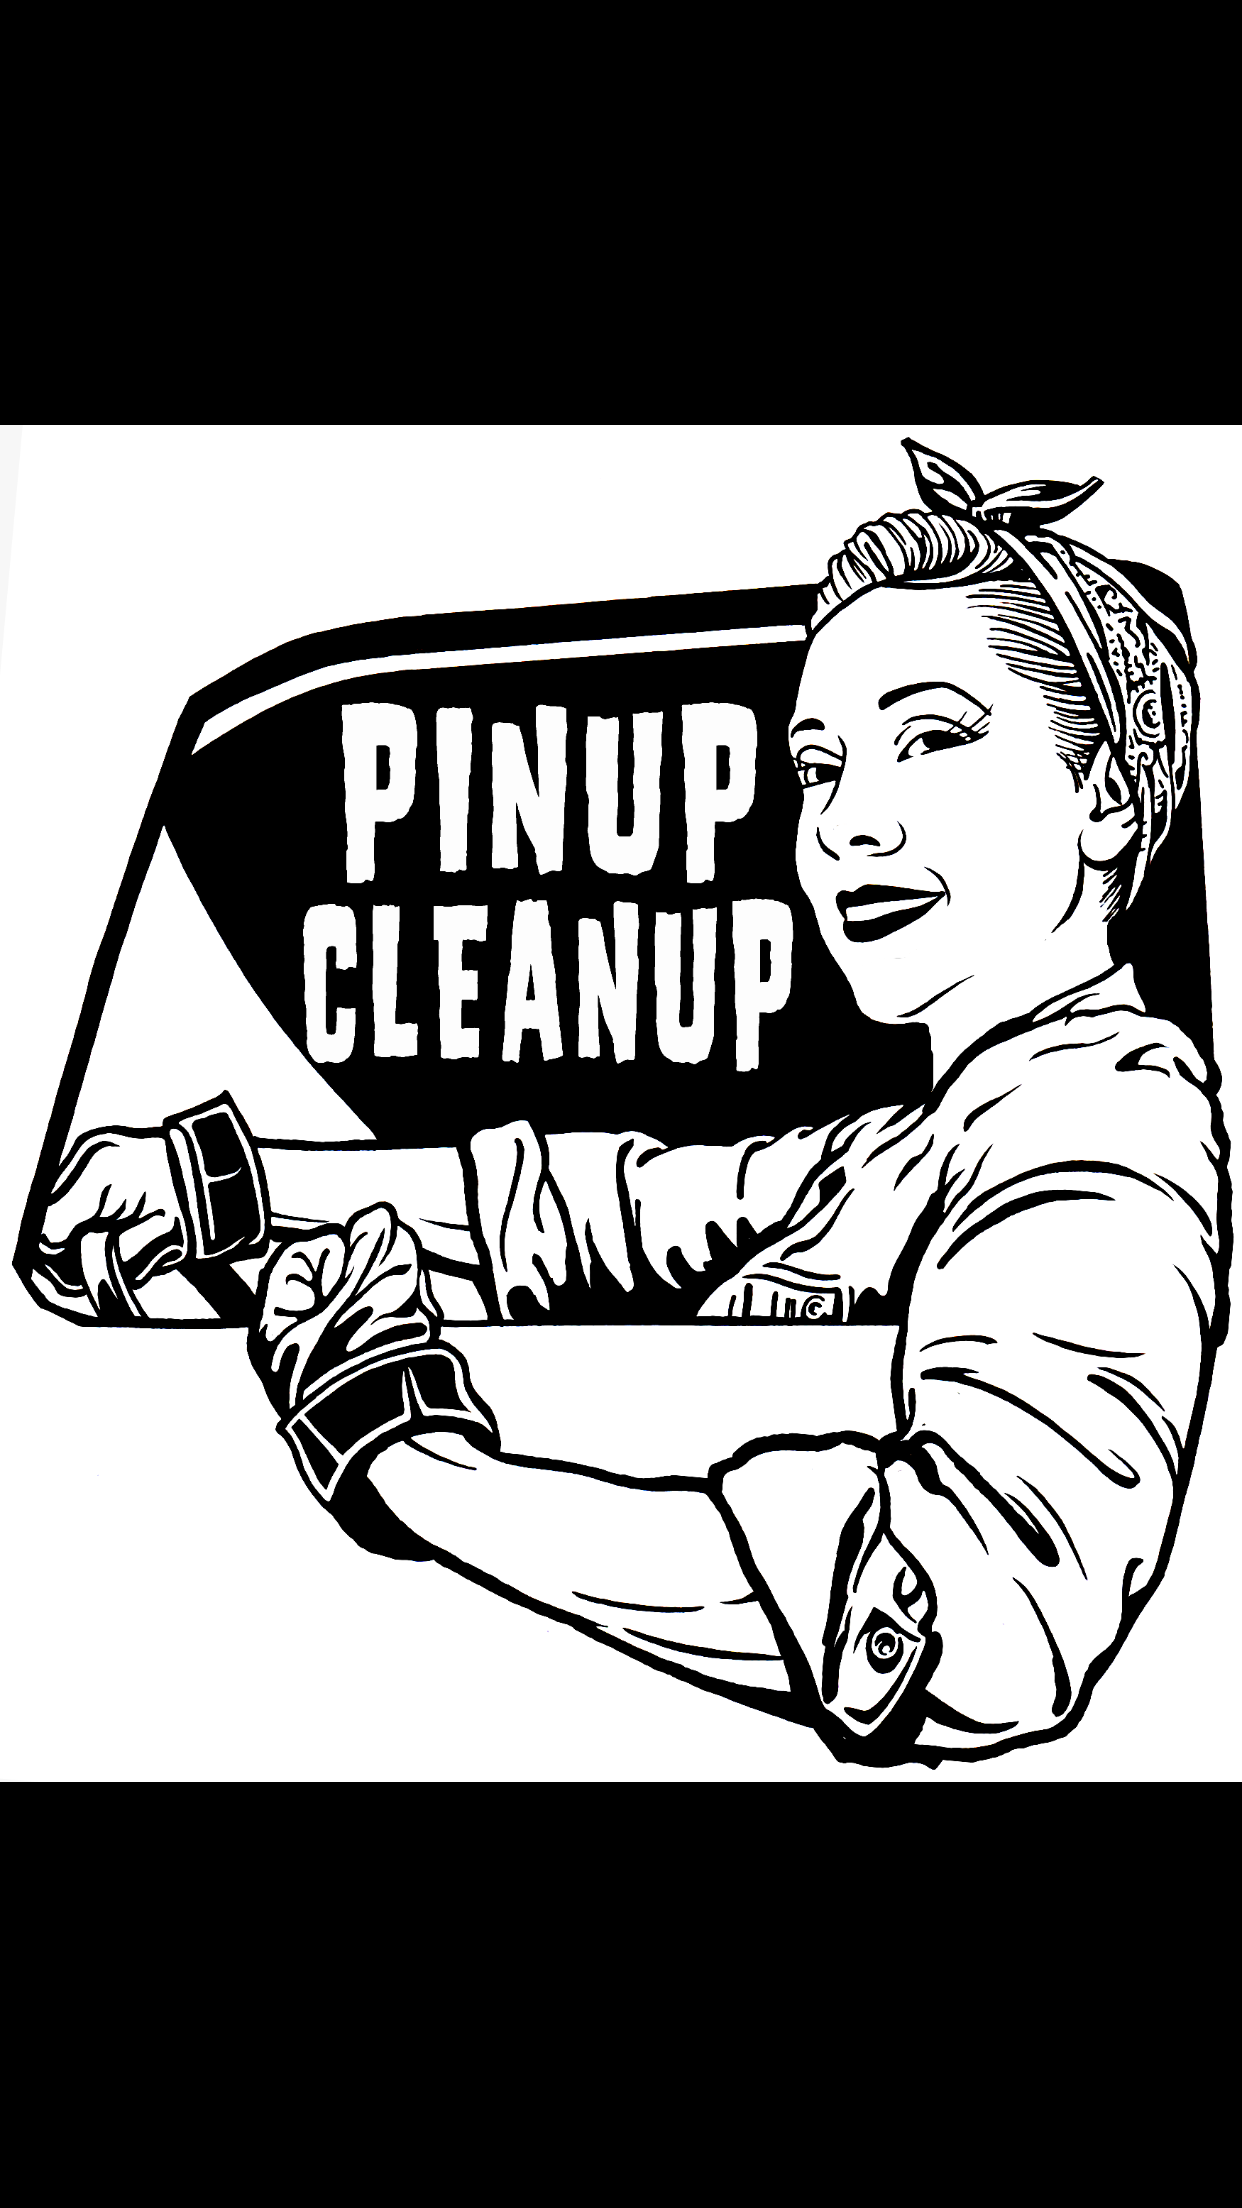 Pinup Cleanup LLC Logo